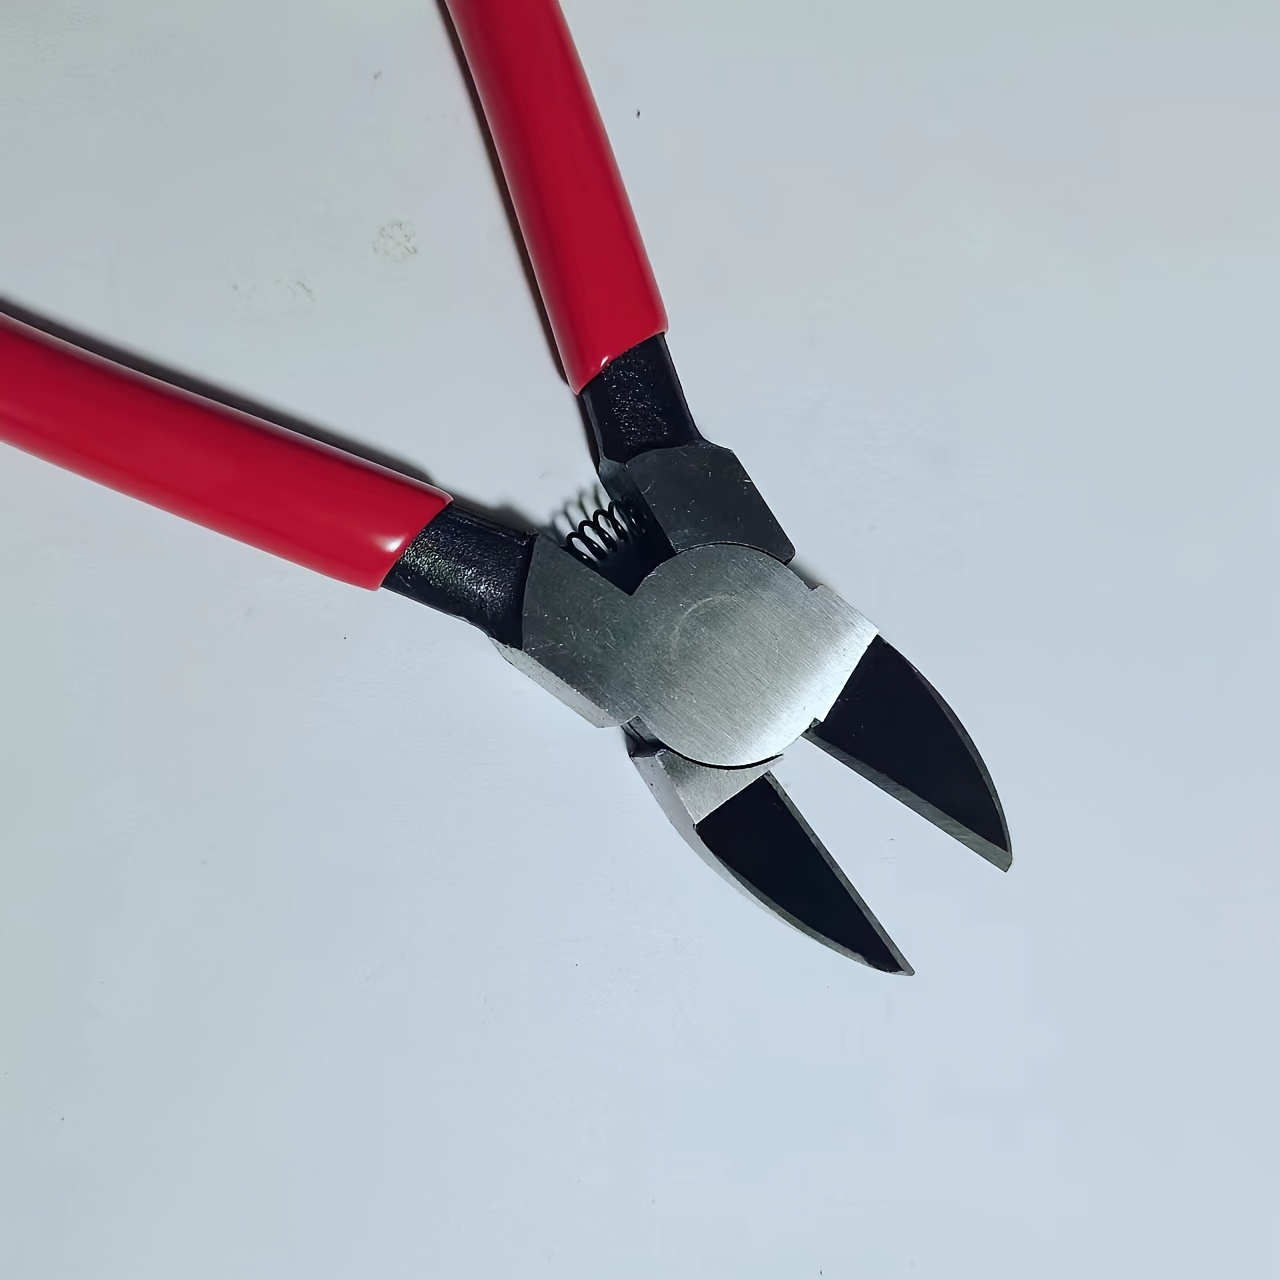 EGA MASTER 76617 - 25mm Jaw Length Diagonal Cutting Pliers